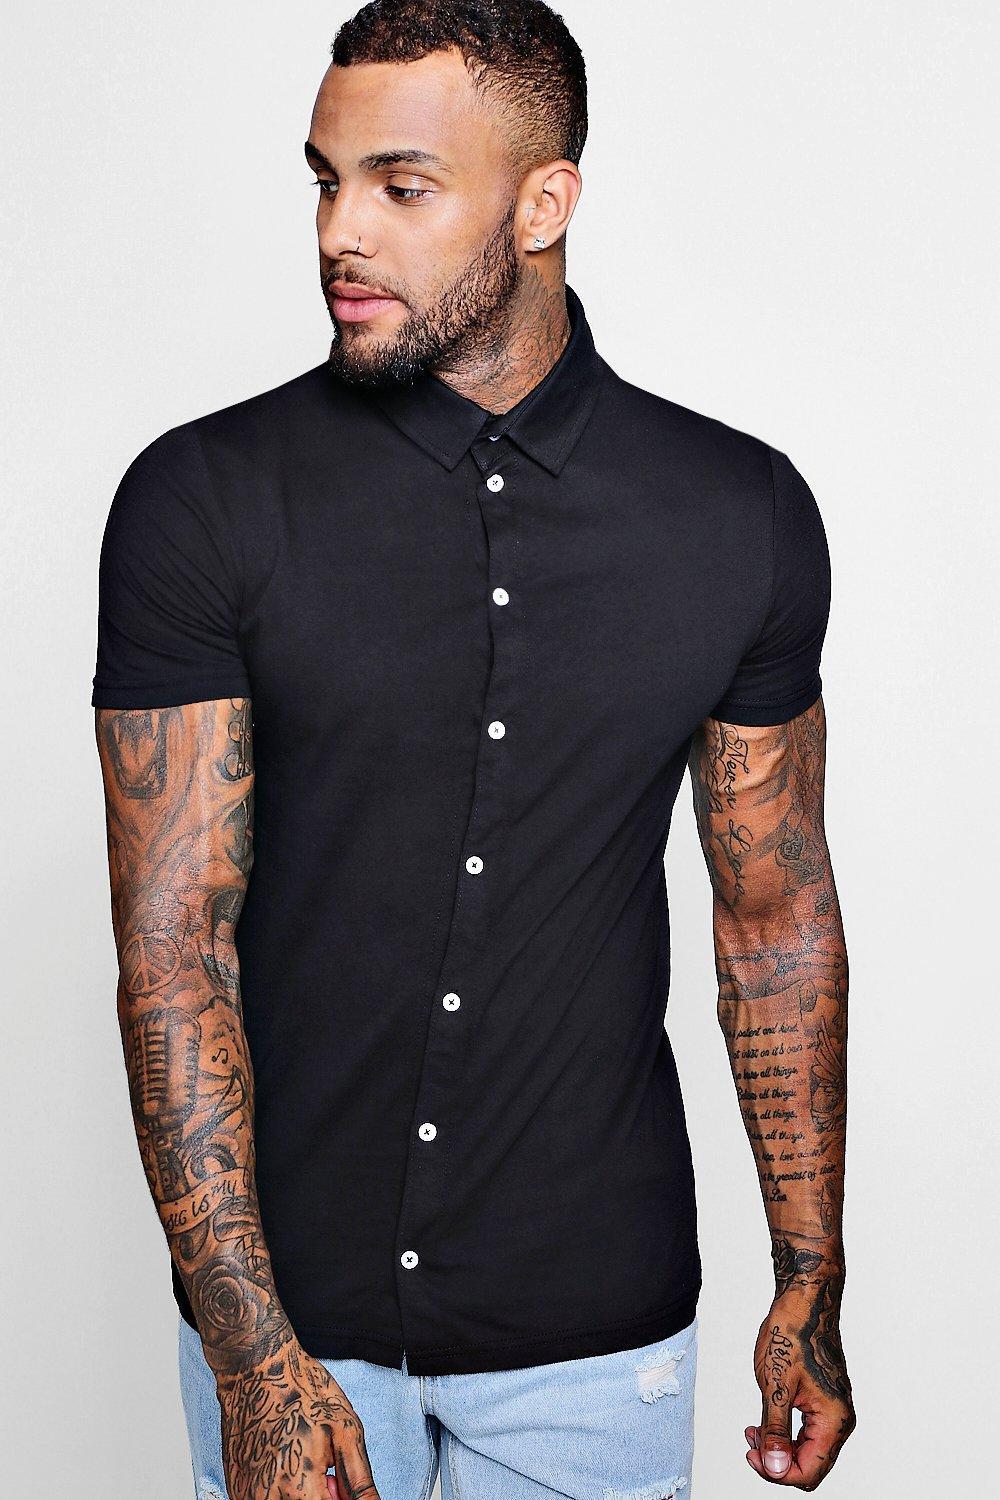 BoohooMAN Short Sleeve Jersey Shirt in Black for Men - Lyst